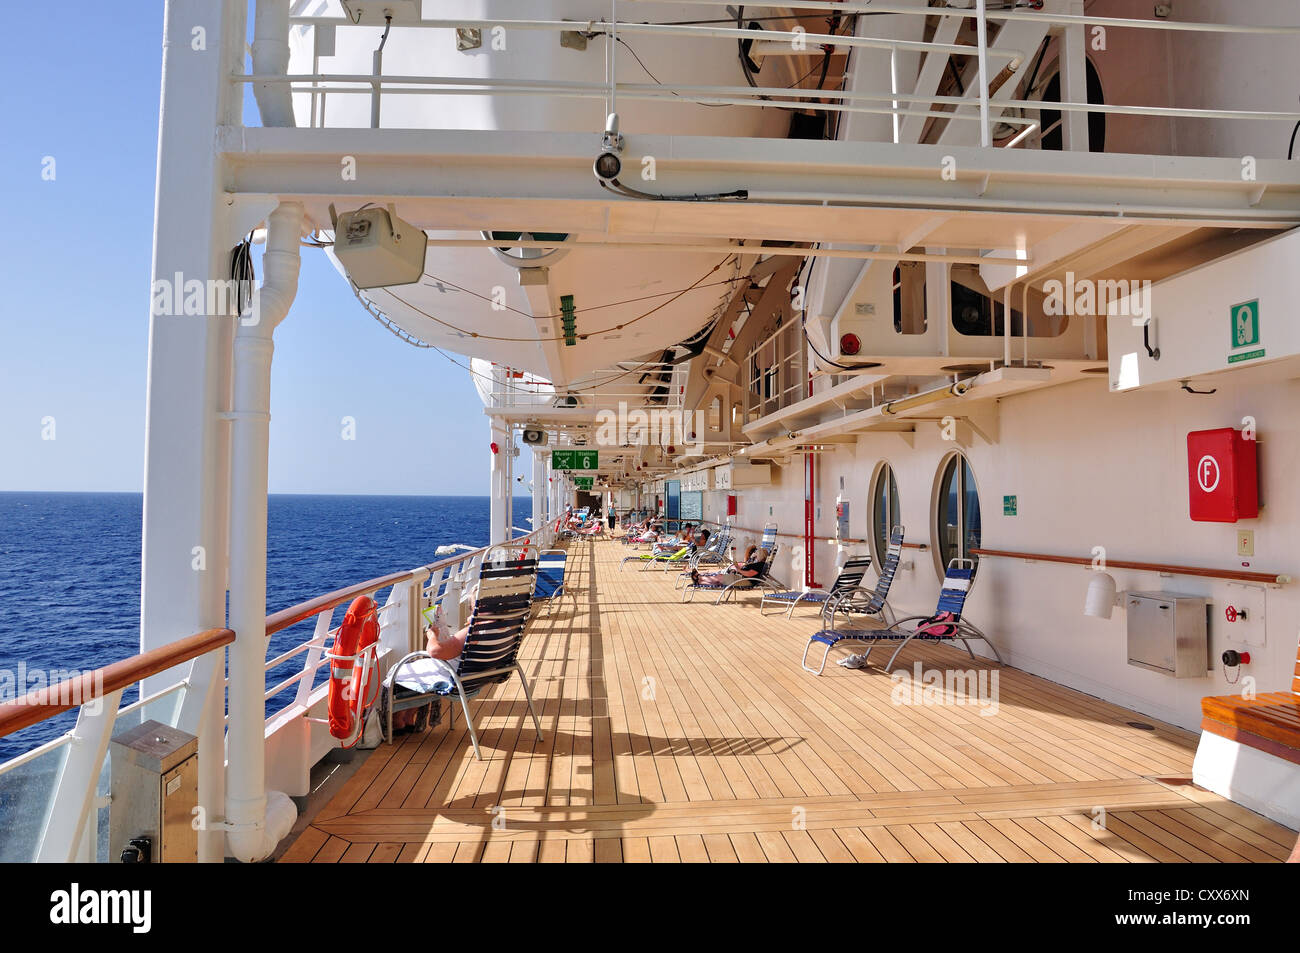 Blick auf Deck an Bord von Royal Caribbean "Grandeur of the Seas" Kreuzfahrtschiff, Adria, Mittelmeer, Europa Stockfoto